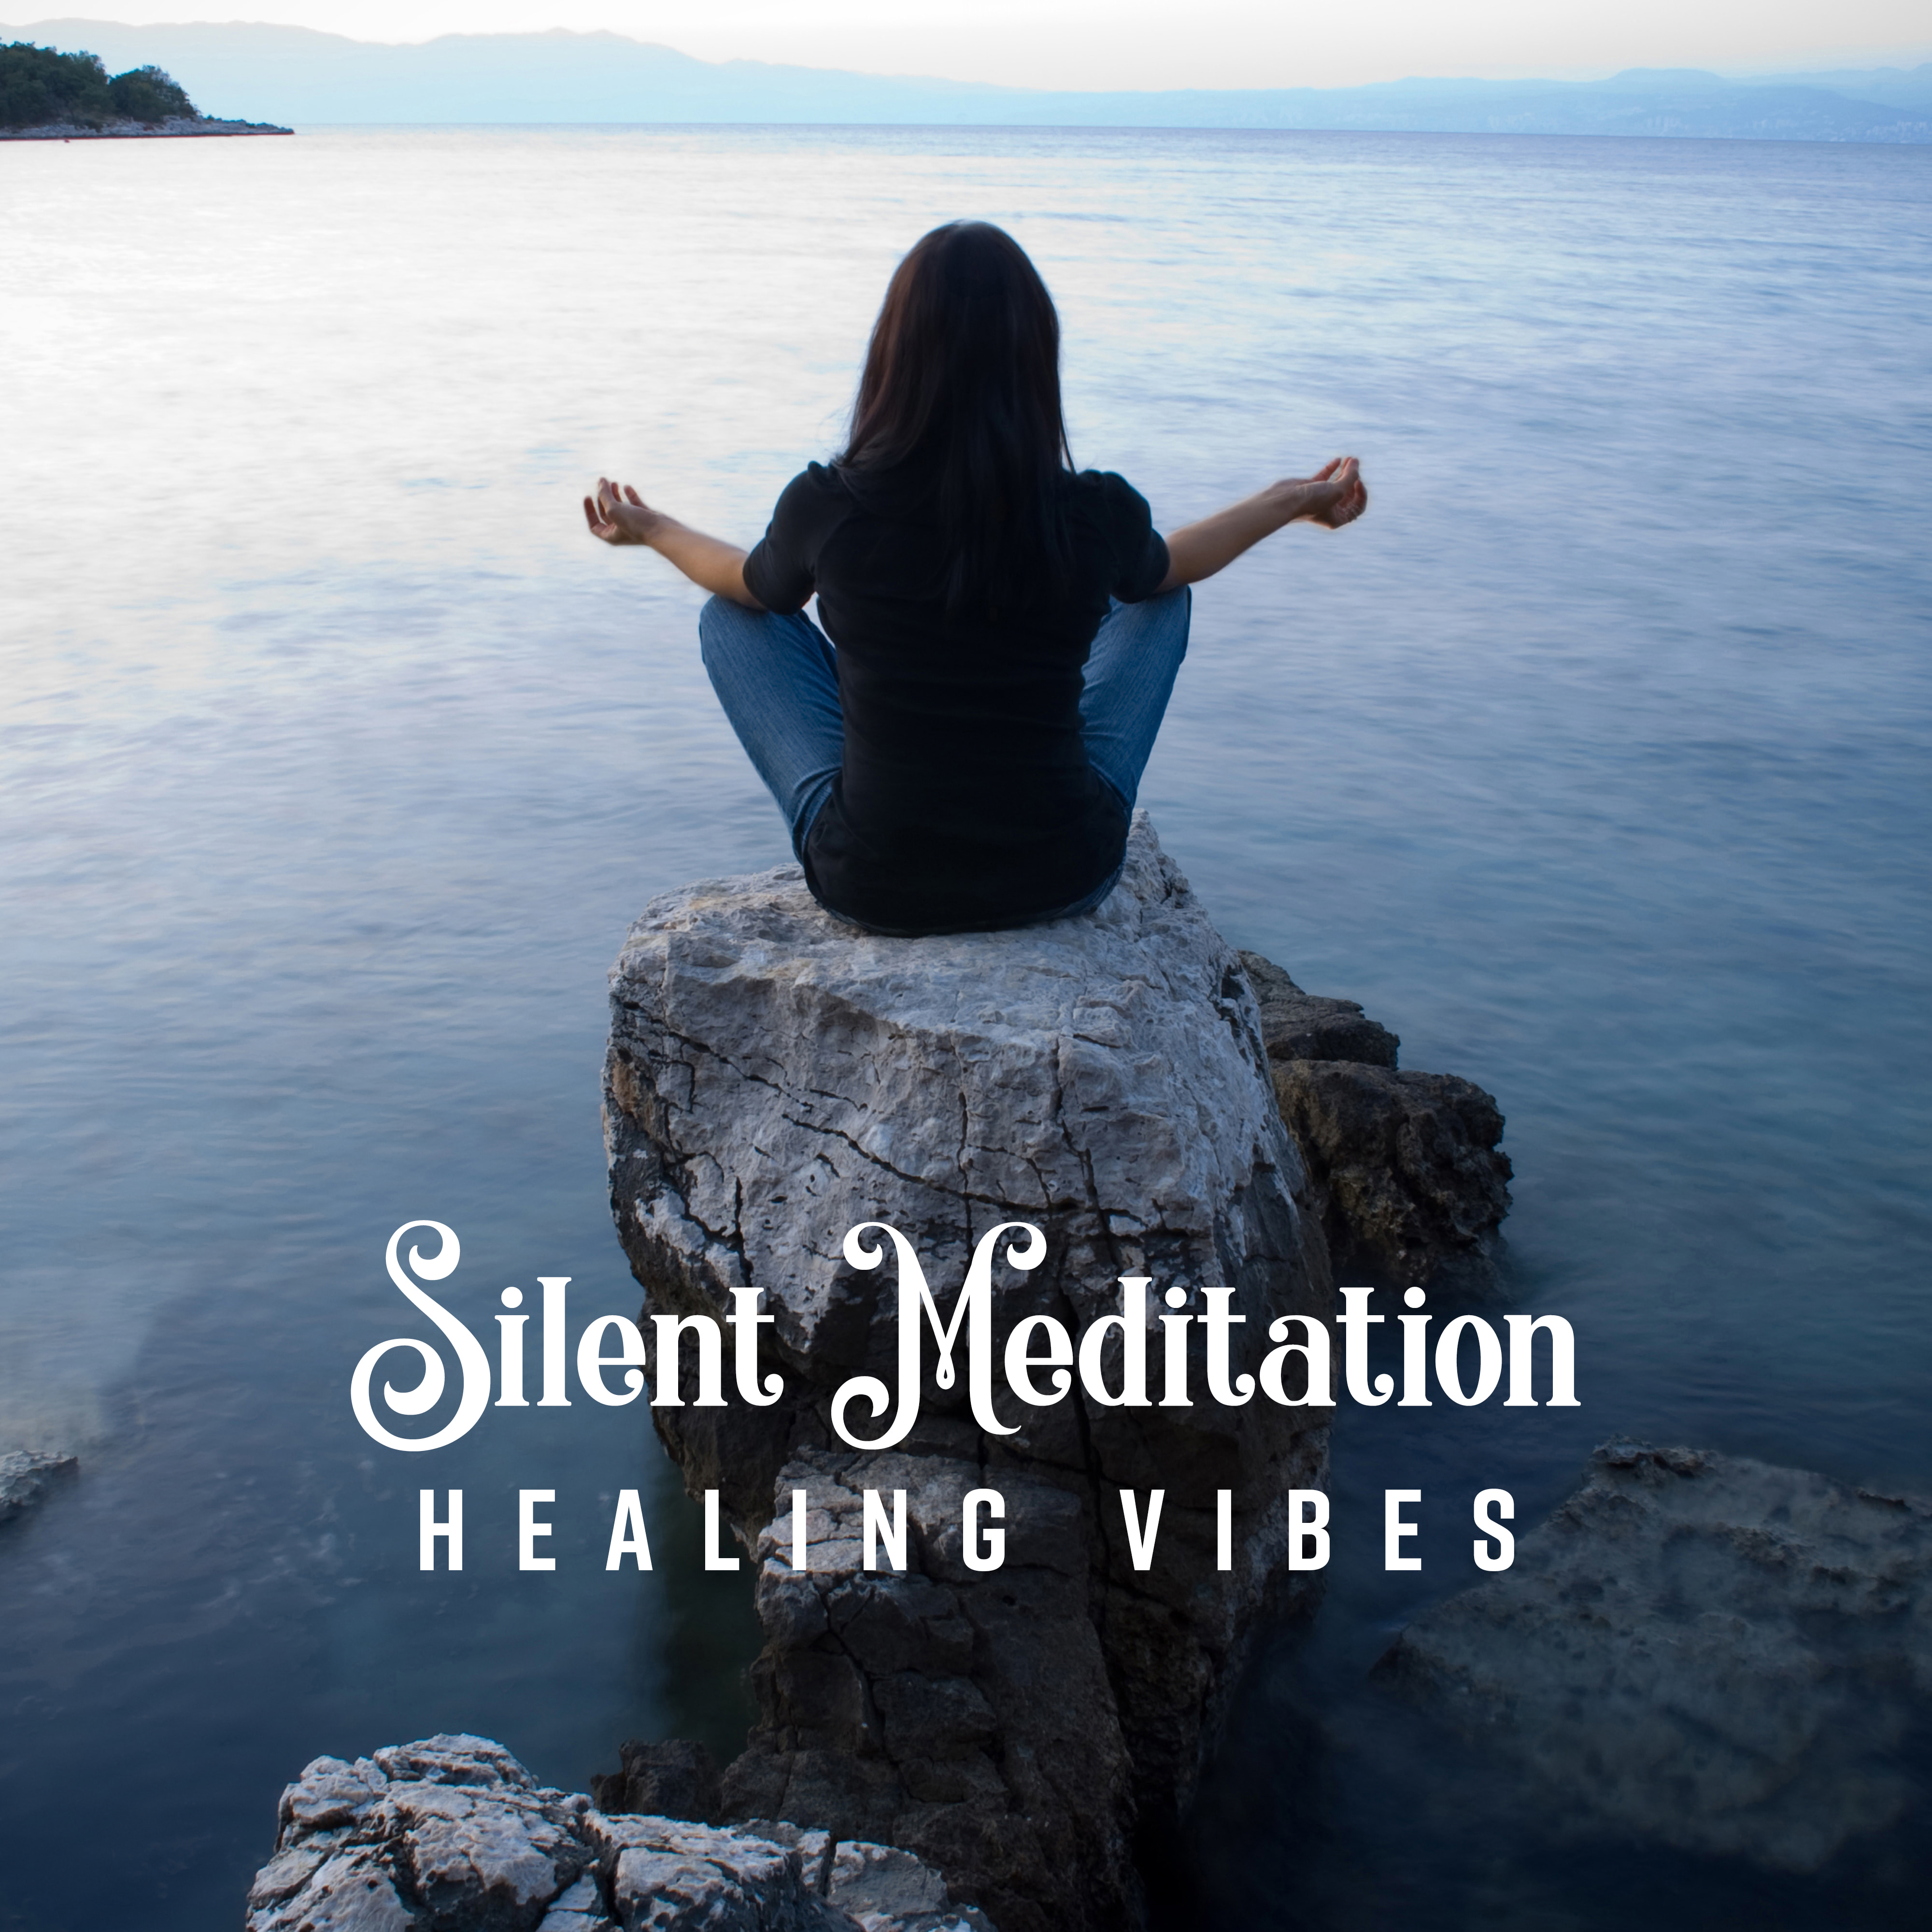 Silent Meditation: Healing Vibes